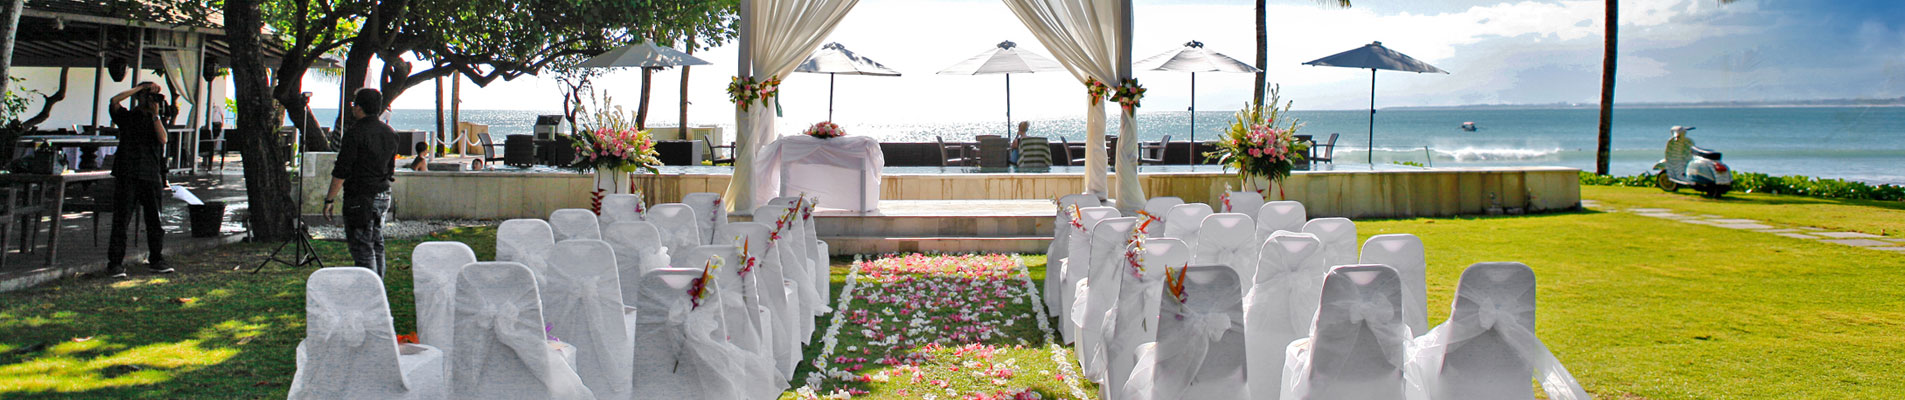 Bali-Garden-Kuta wedding-tackages